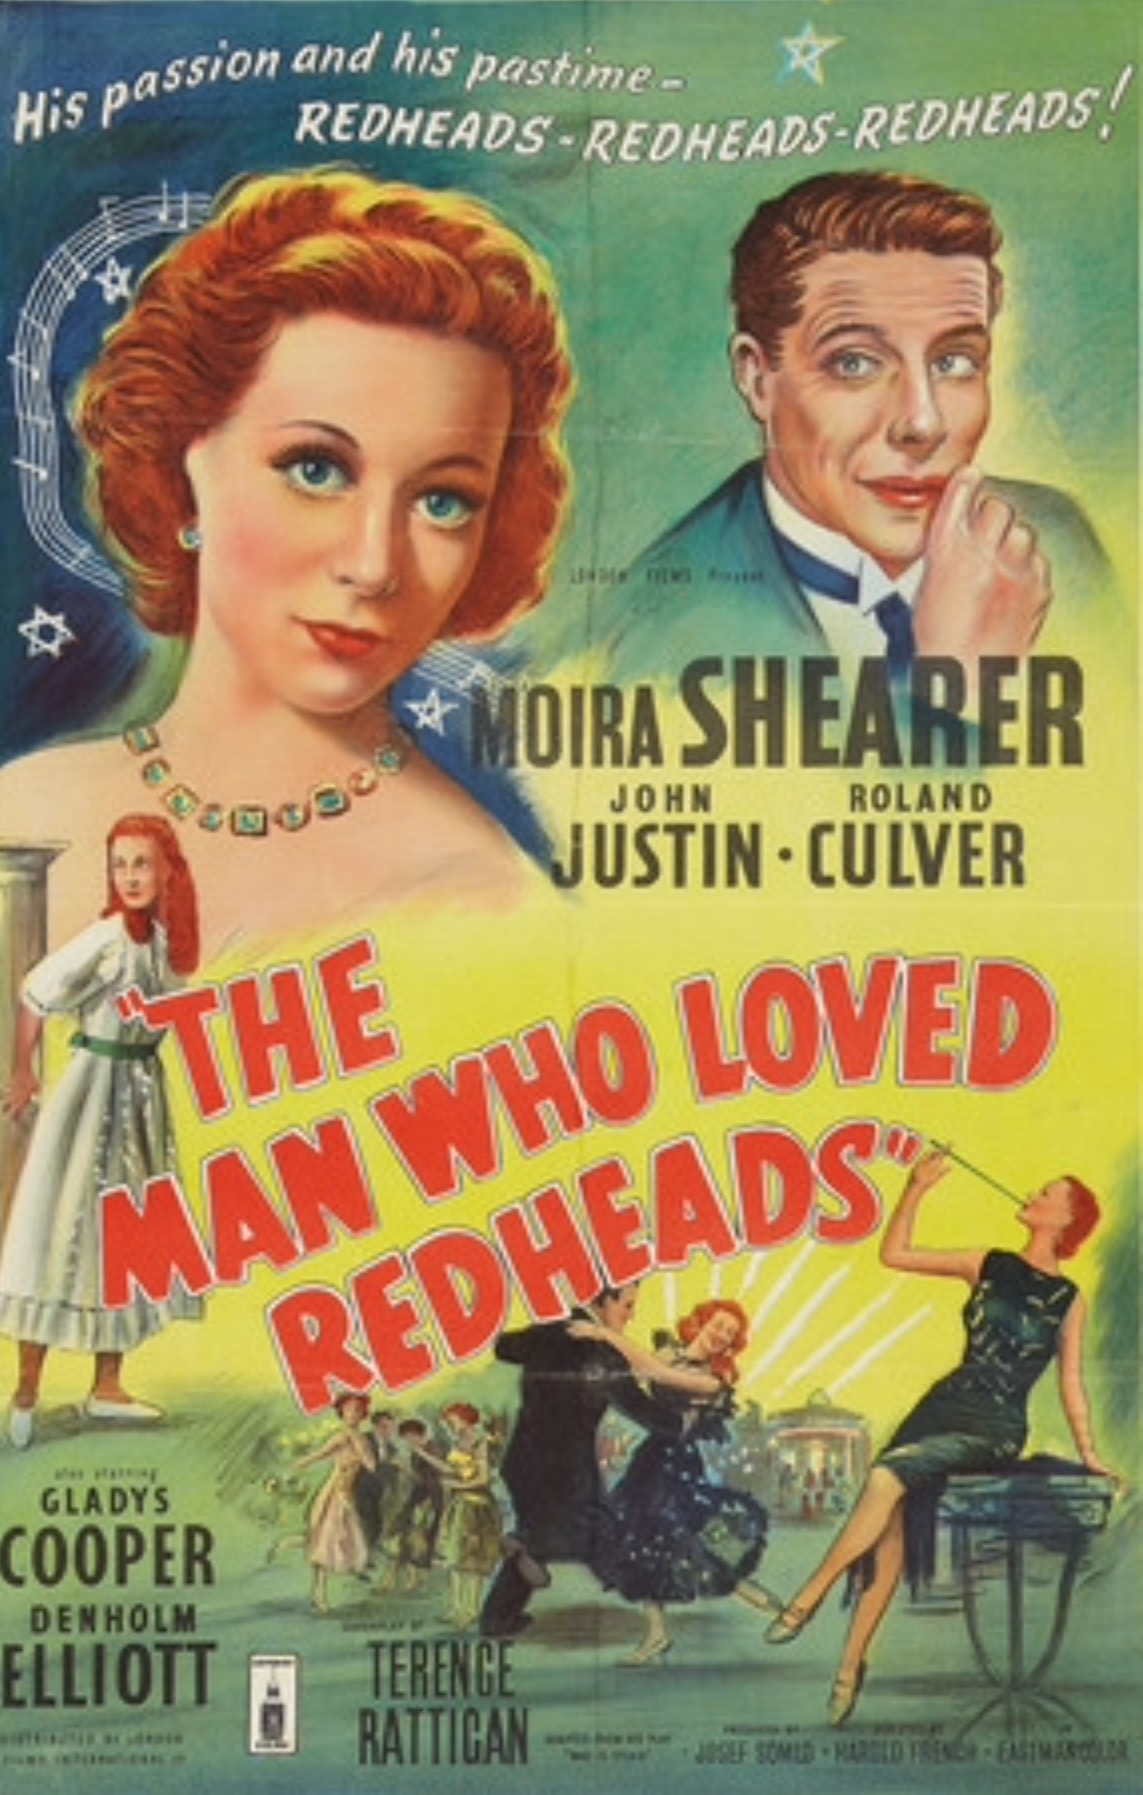 The Man Who Loved Redheads (1955) Screenshot 3